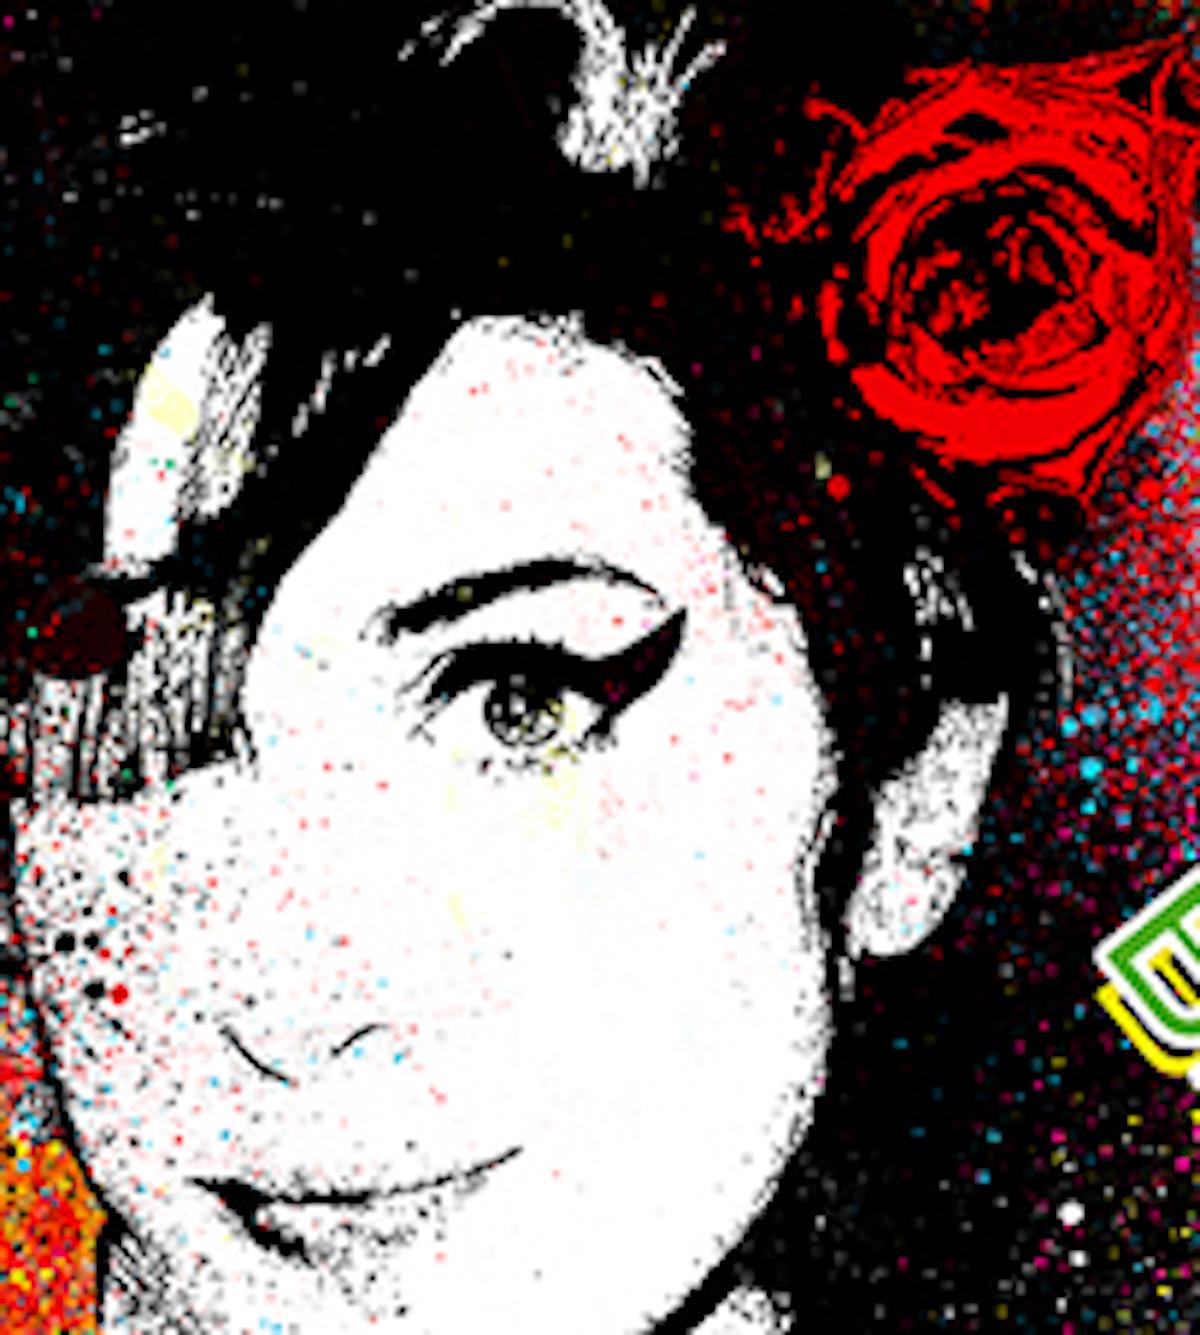 (Amy) You Know Love Is, Amy Winehouse Portrait, Famous Celebrity Artwork Pop Art - Print by Agent X